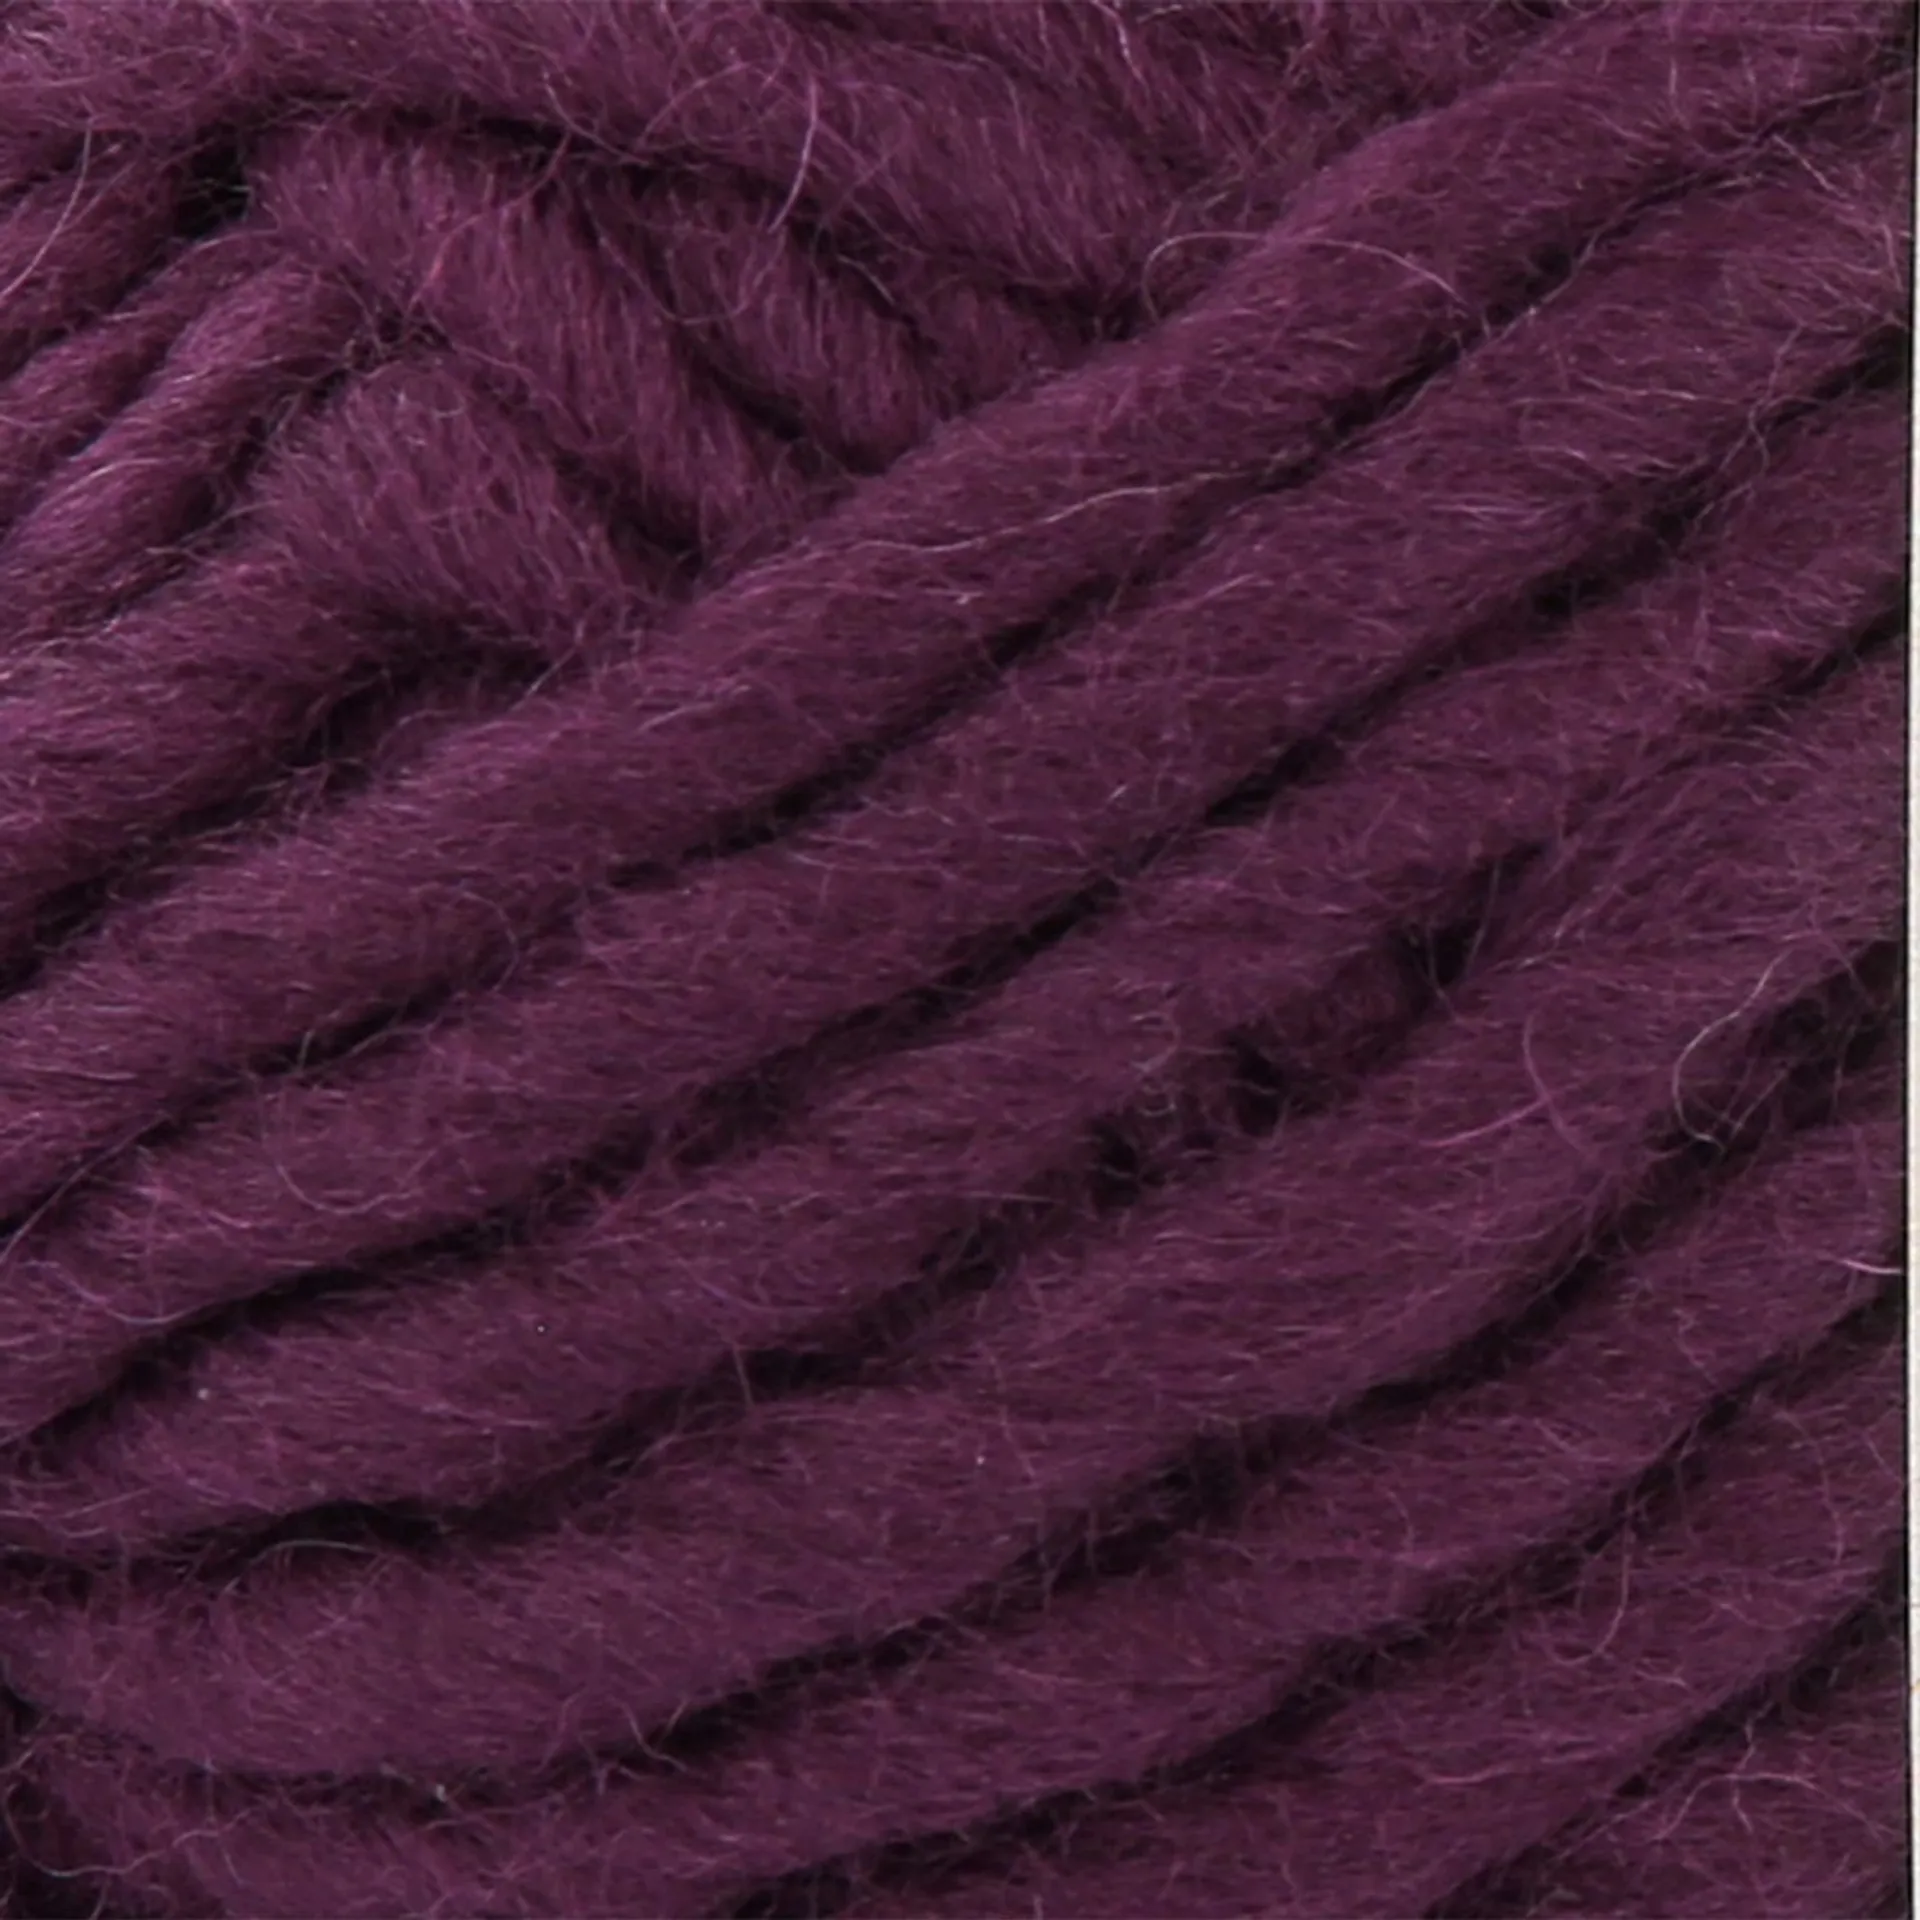 Novita Lanka Hygge Wool 100g 596 - 2